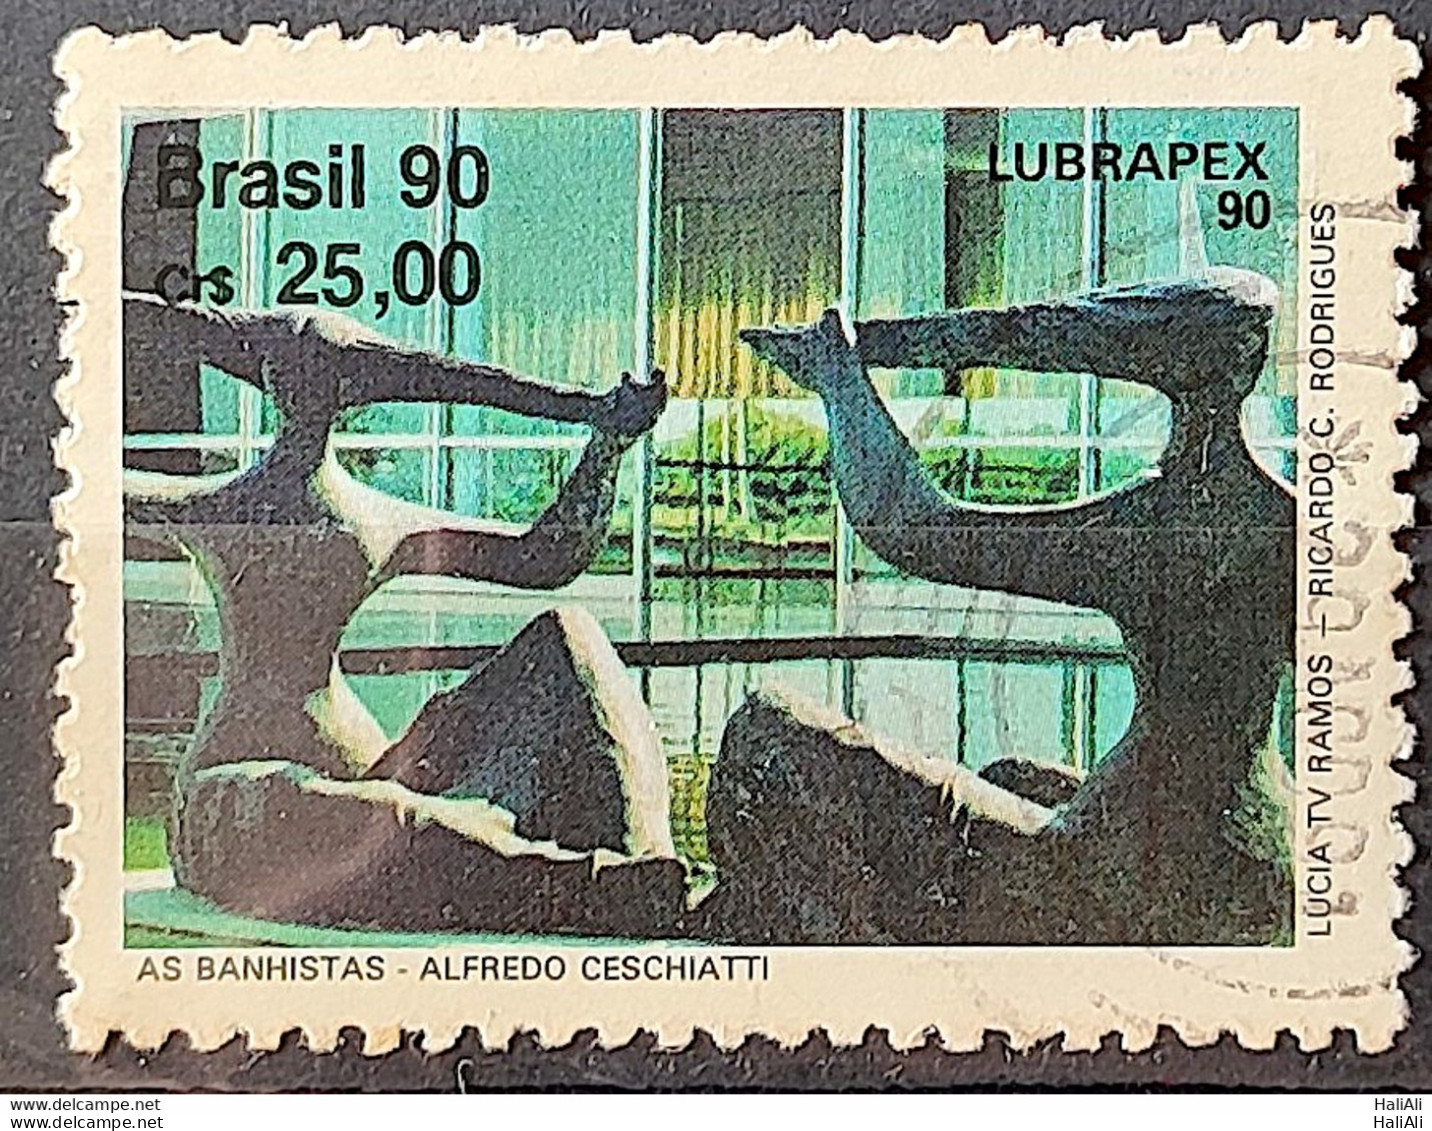 C 1698 Brazil Stamp Lubrapex Brasilia Sculpture Alfredo Ceschiatti Bruno Giorgi The Bathers 1990 Circulated 1 - Used Stamps